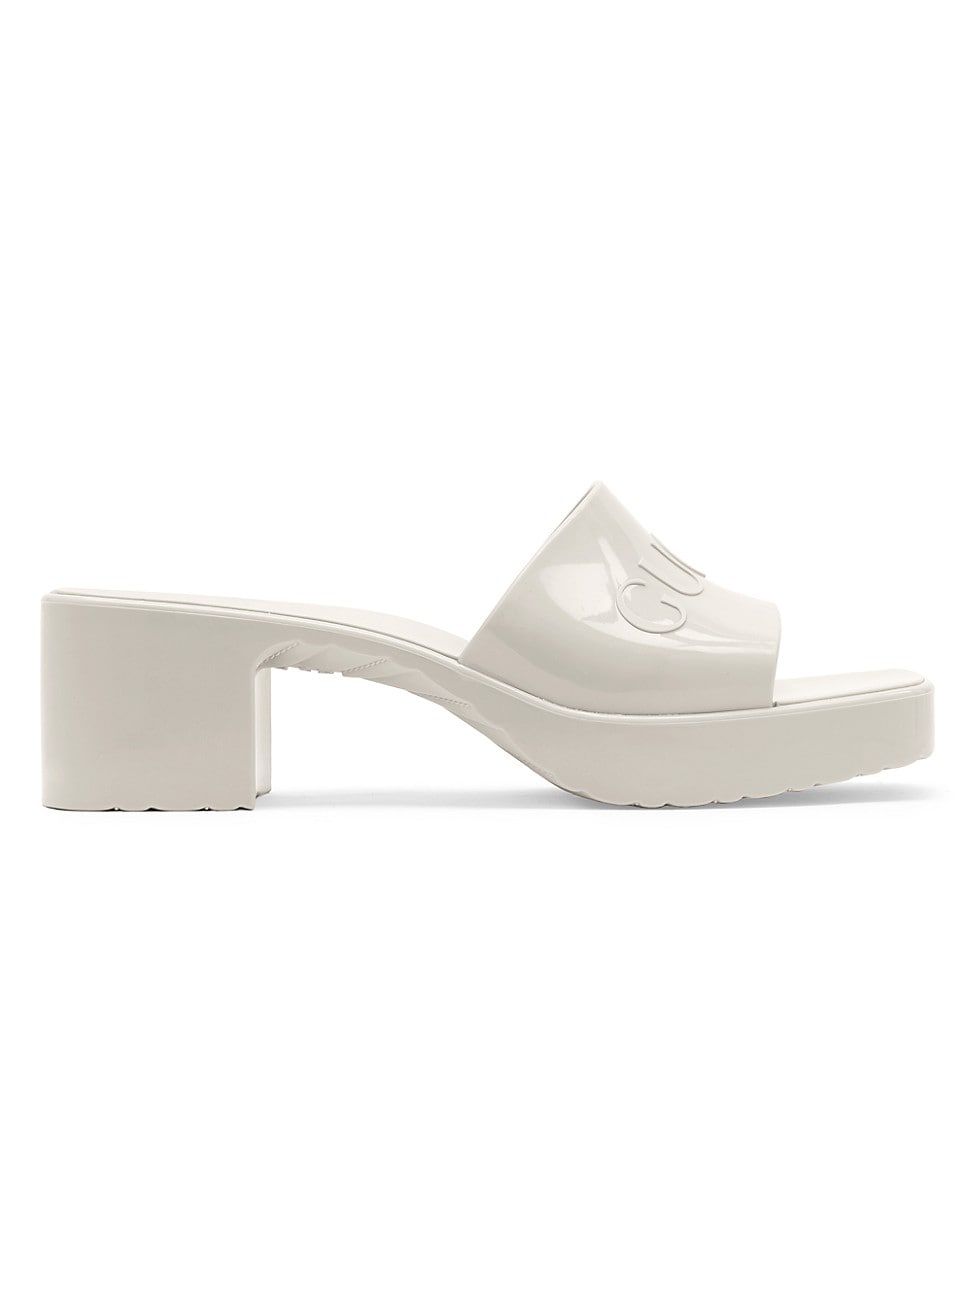 Gucci Women's Women's Rubber Slide Sandals - Mystic White - Size 8 | Saks Fifth Avenue